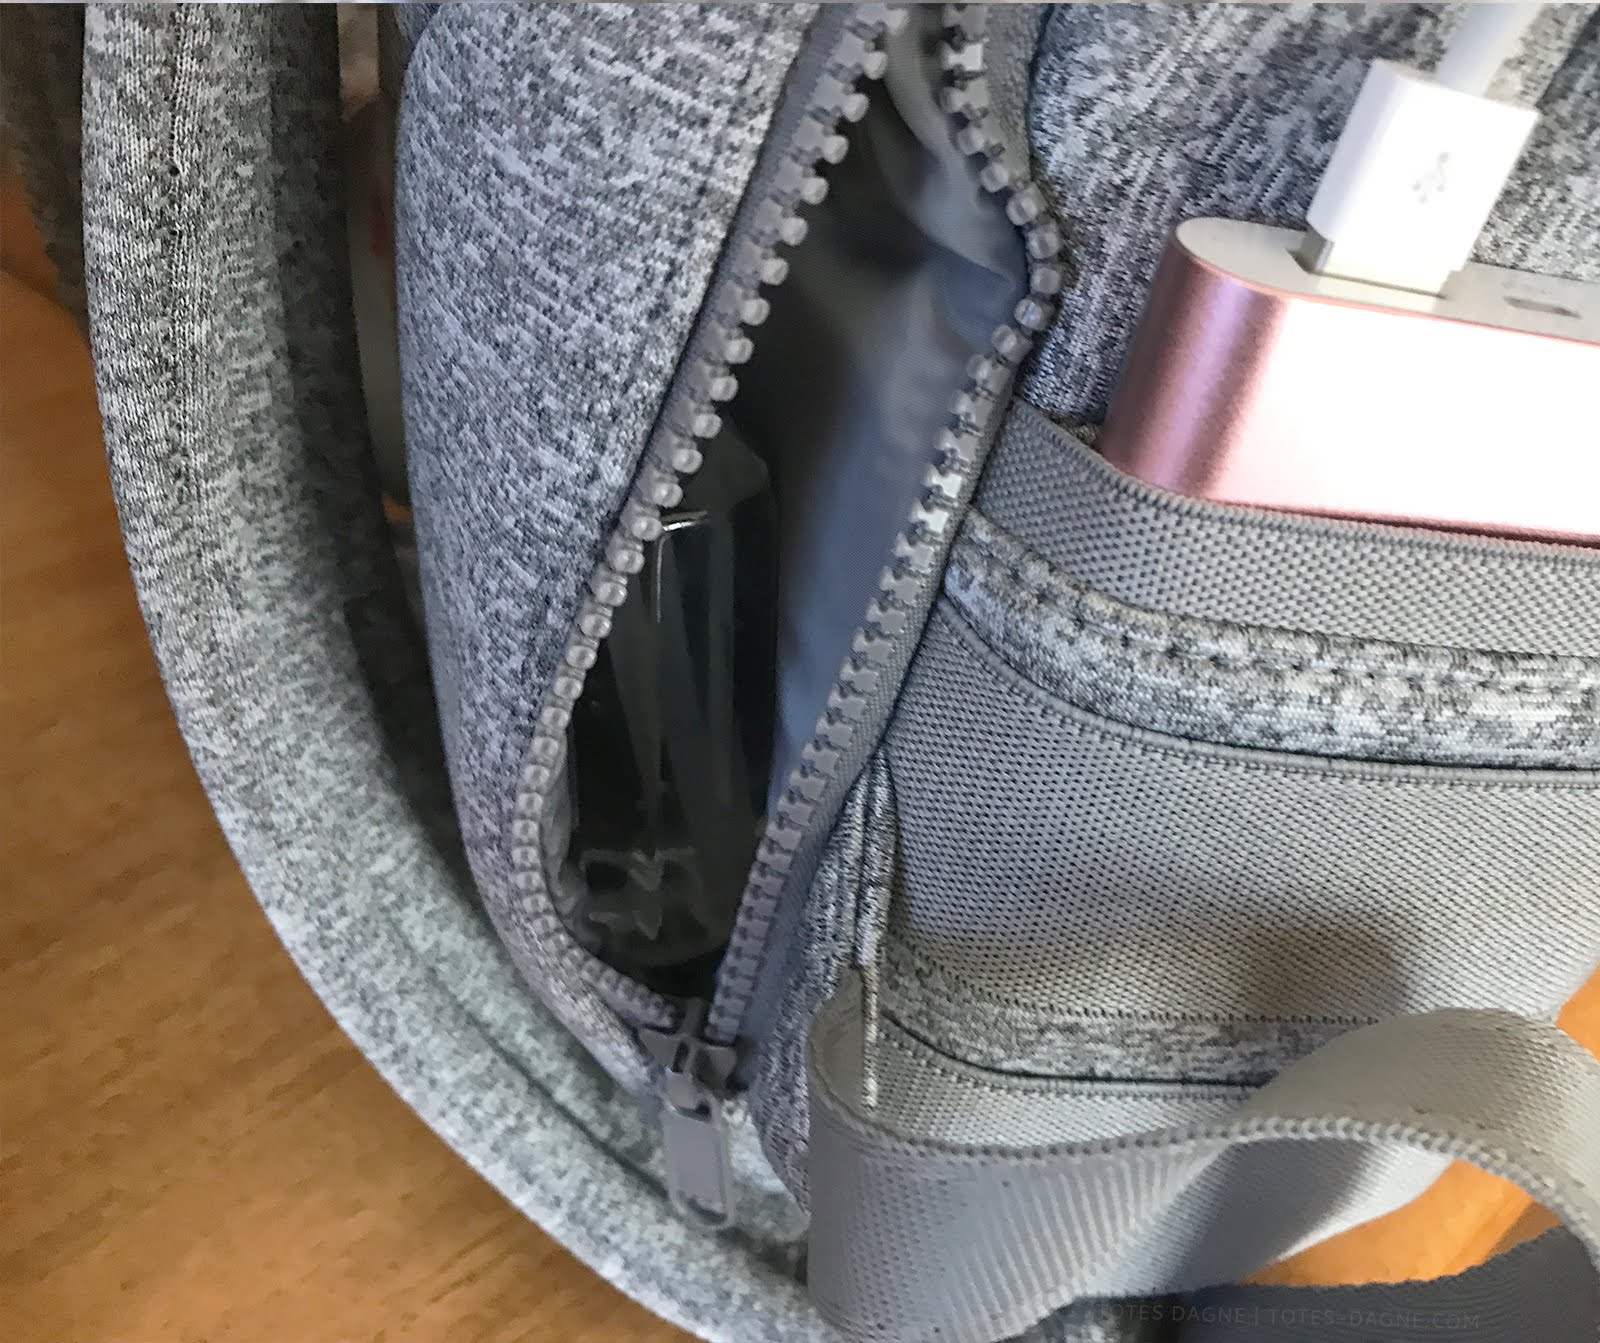 dagne dover small dakota backpack review｜TikTok Search